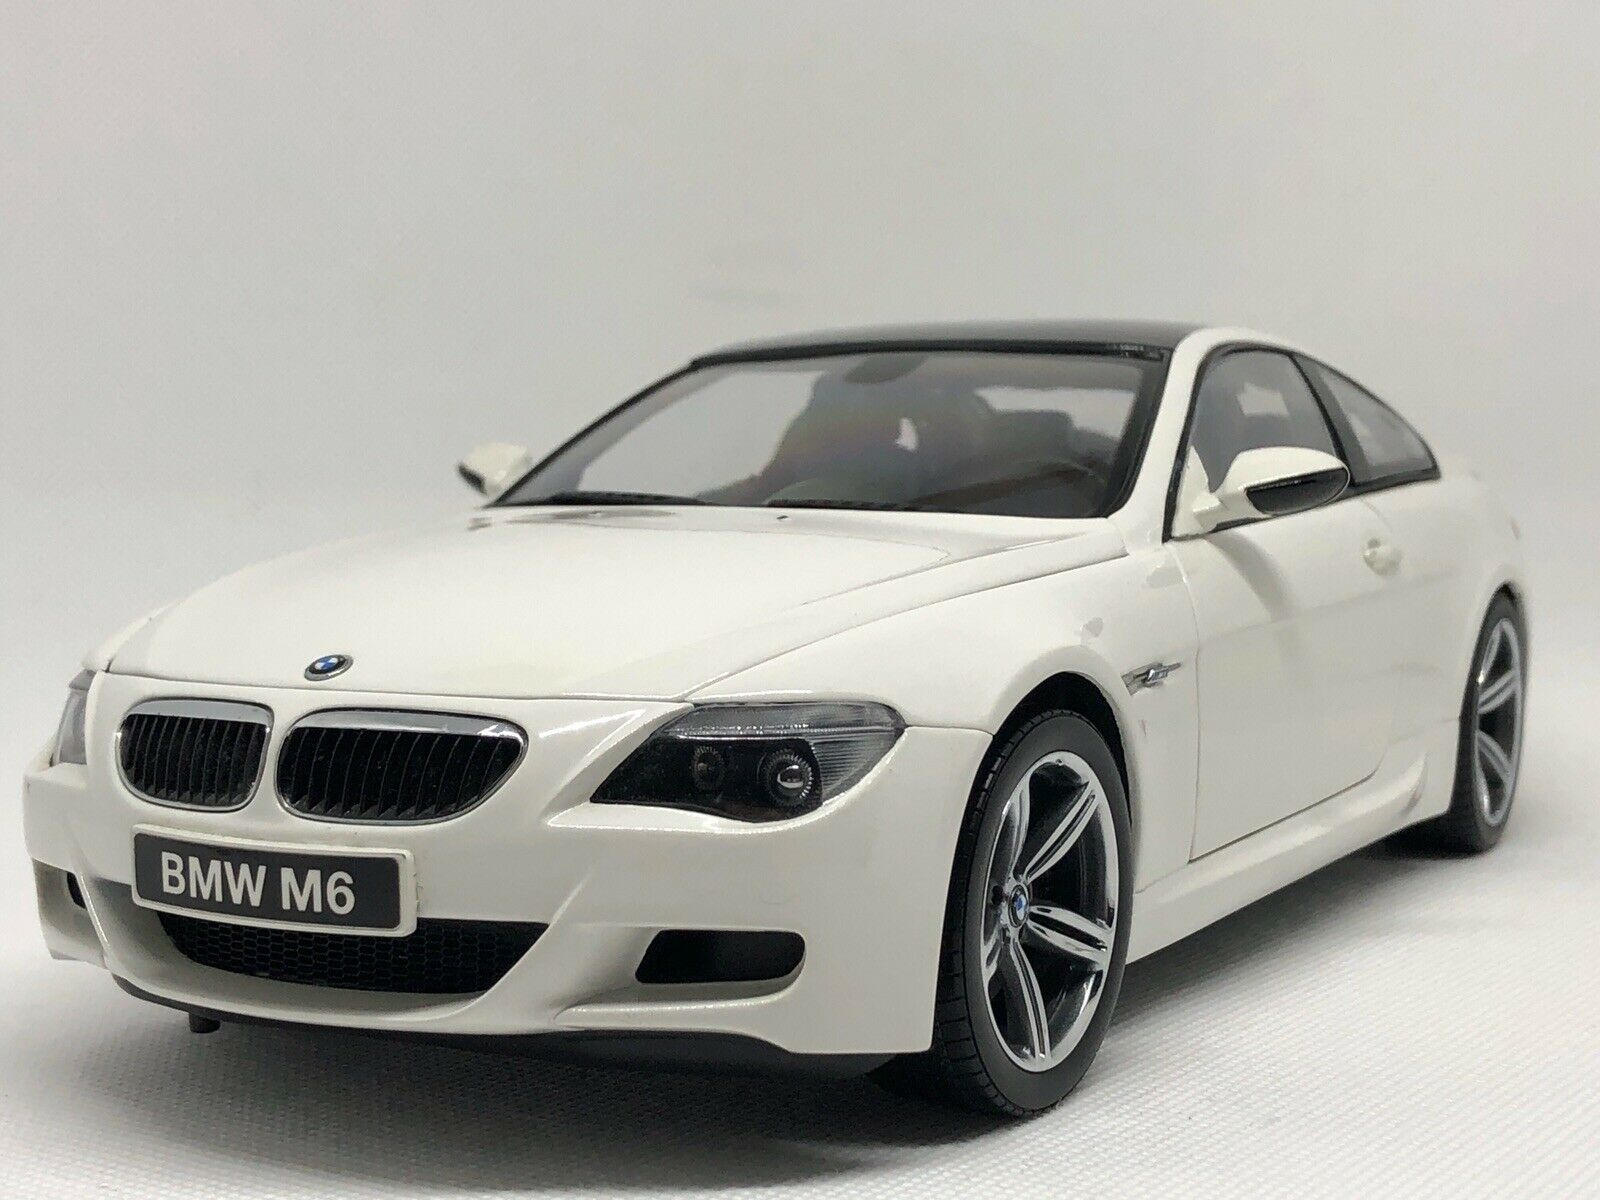 yosho BMW e63 m6 v10 blanc neuf dans sa boite